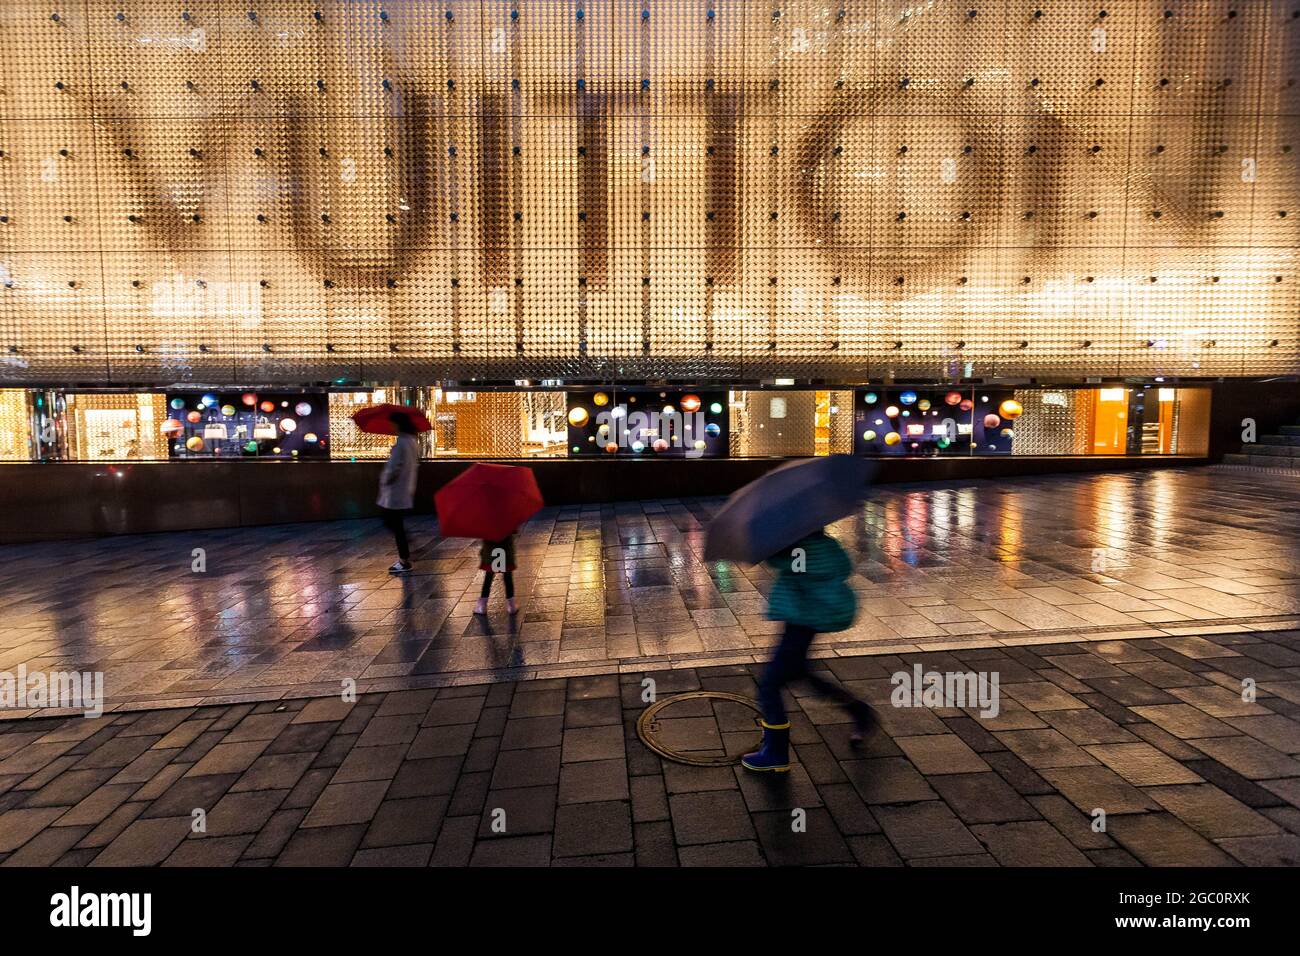 People walk past Louis Vuitton store in rain at night in Tokyo